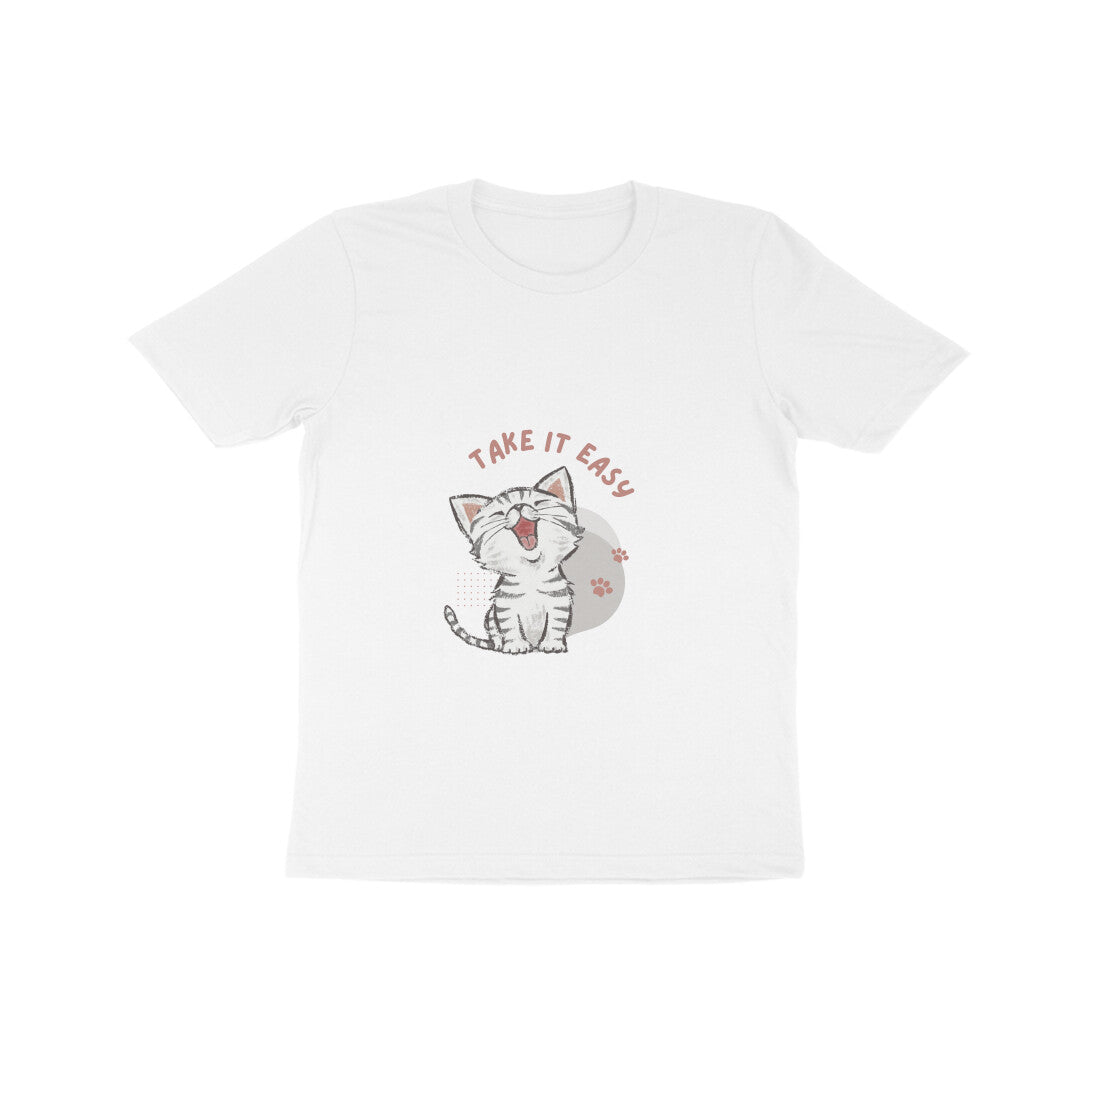 Printed Kids T-Shirt